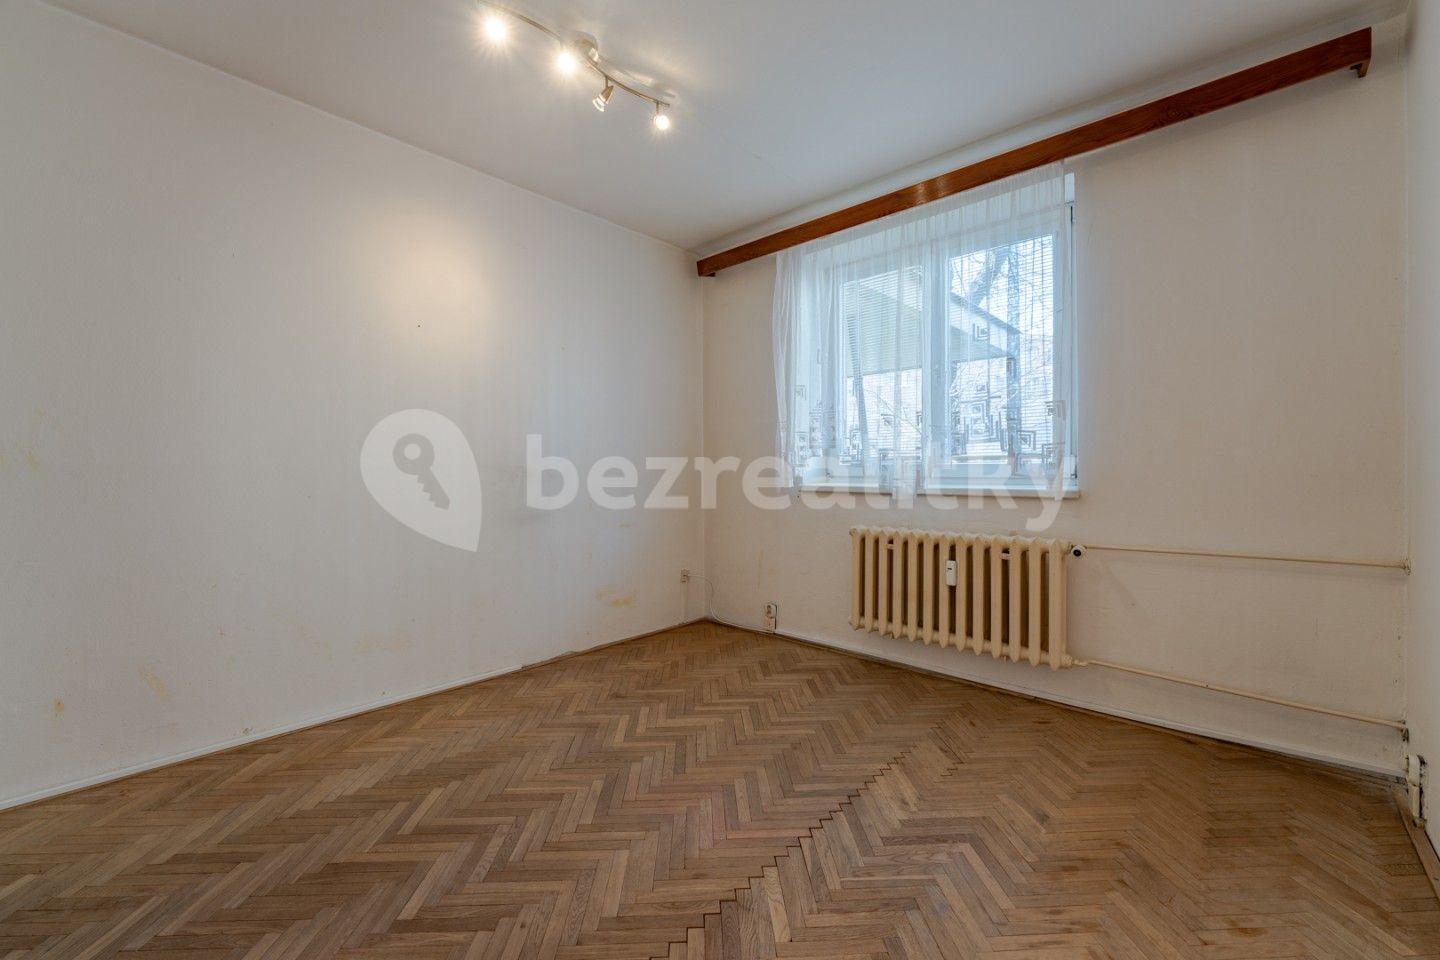 Prodej bytu 2+1 46 m², Jiráskova, Vsetín, Zlínský kraj